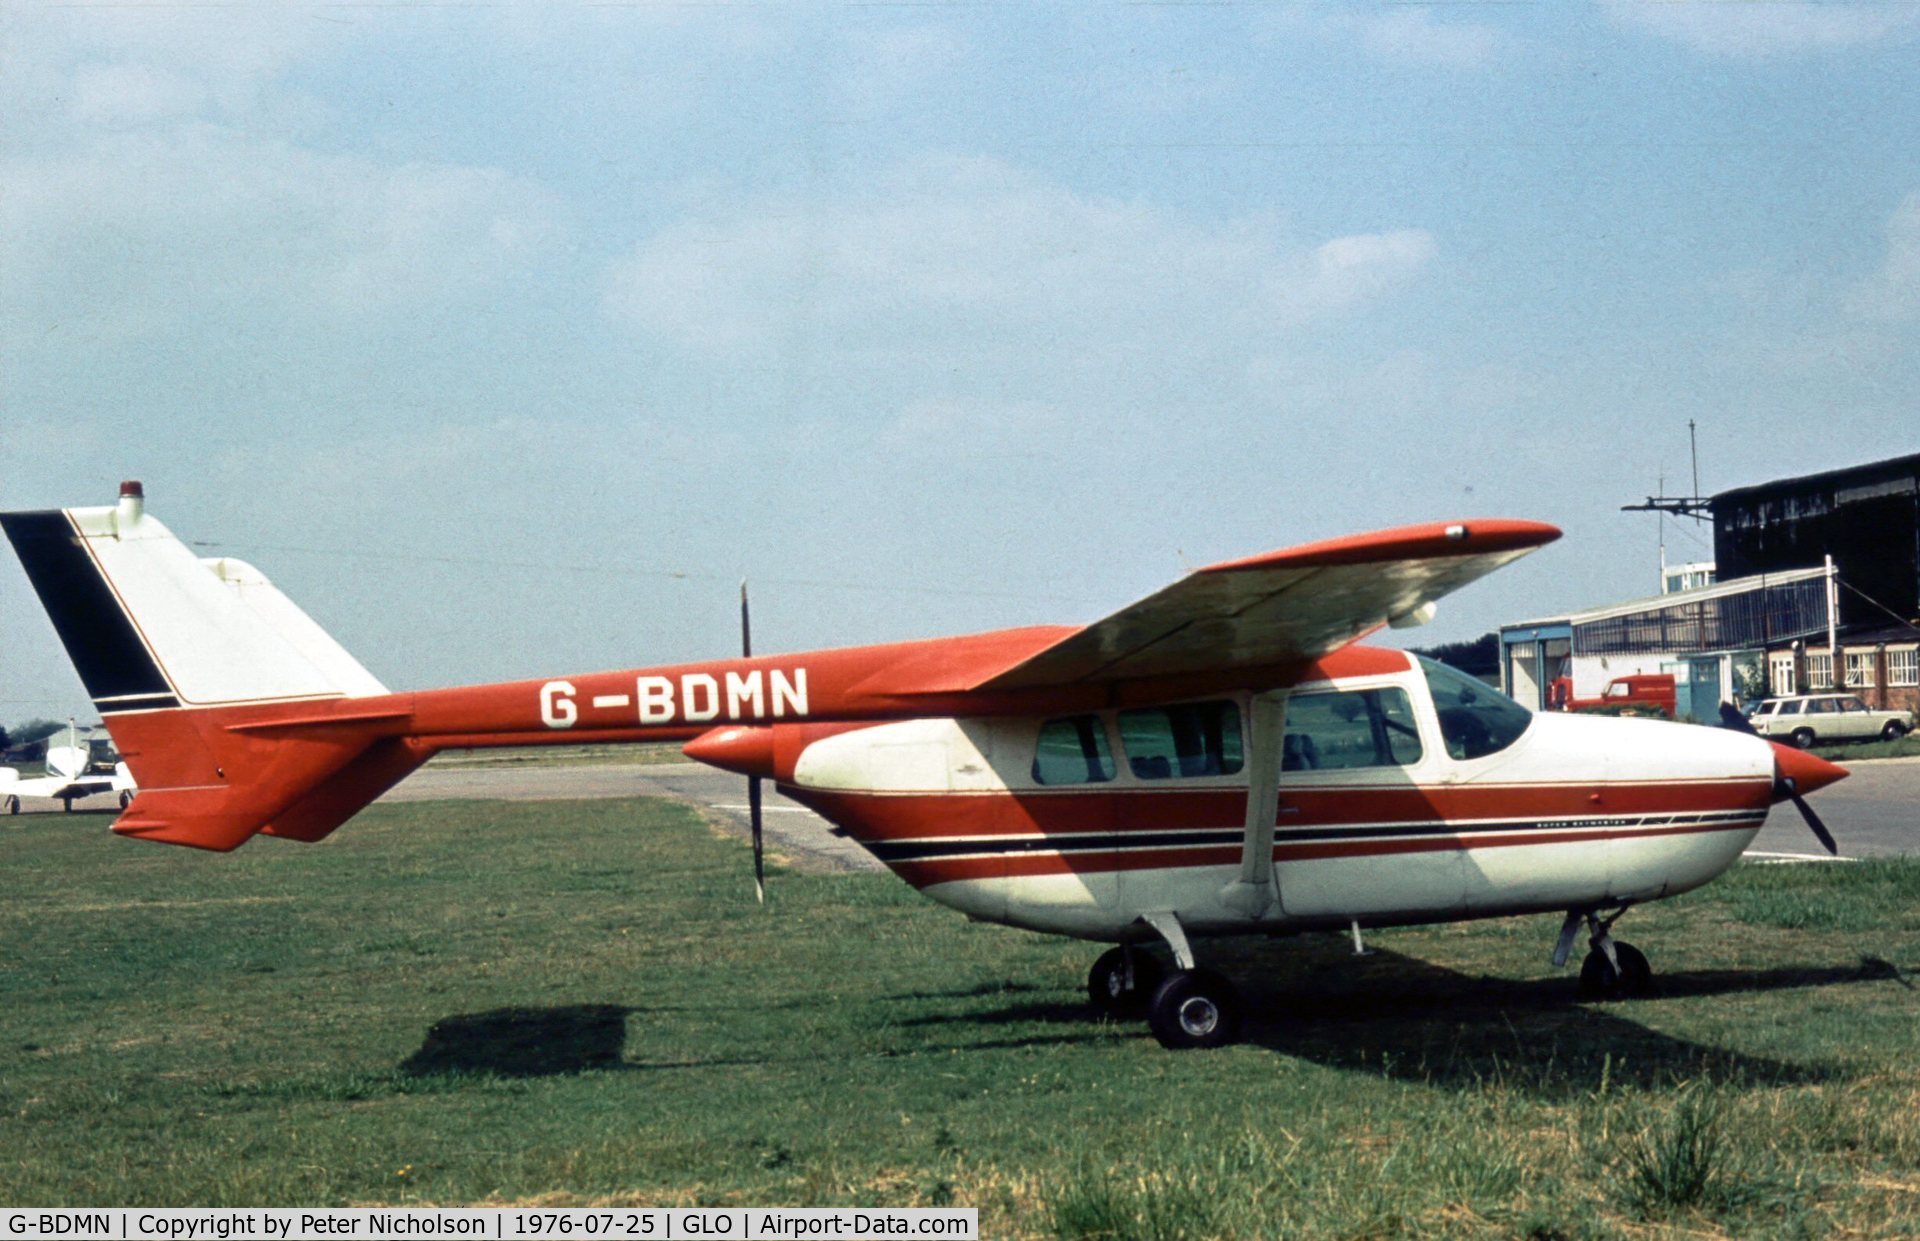 G-BDMN, 1965 Cessna 337 Super Skymaster C/N 337-0118, Cessna 337 Super Skymaster at Staverton in the Summer of 1976.